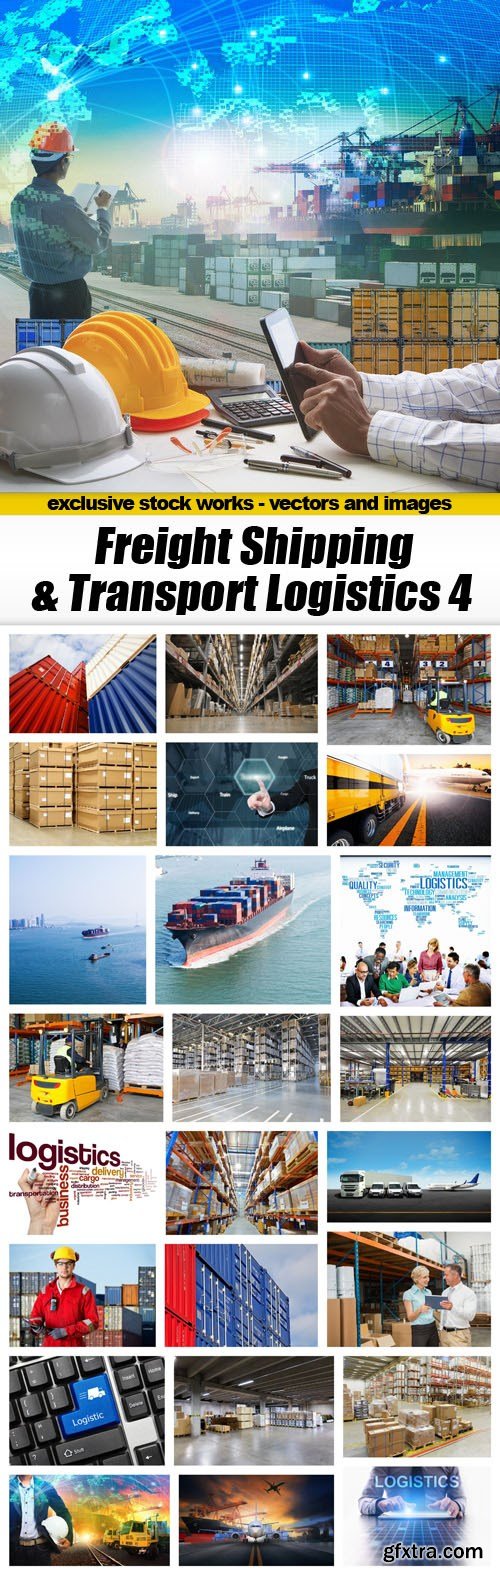 Freight Shipping & Transport Logistics 4, 25xJPG